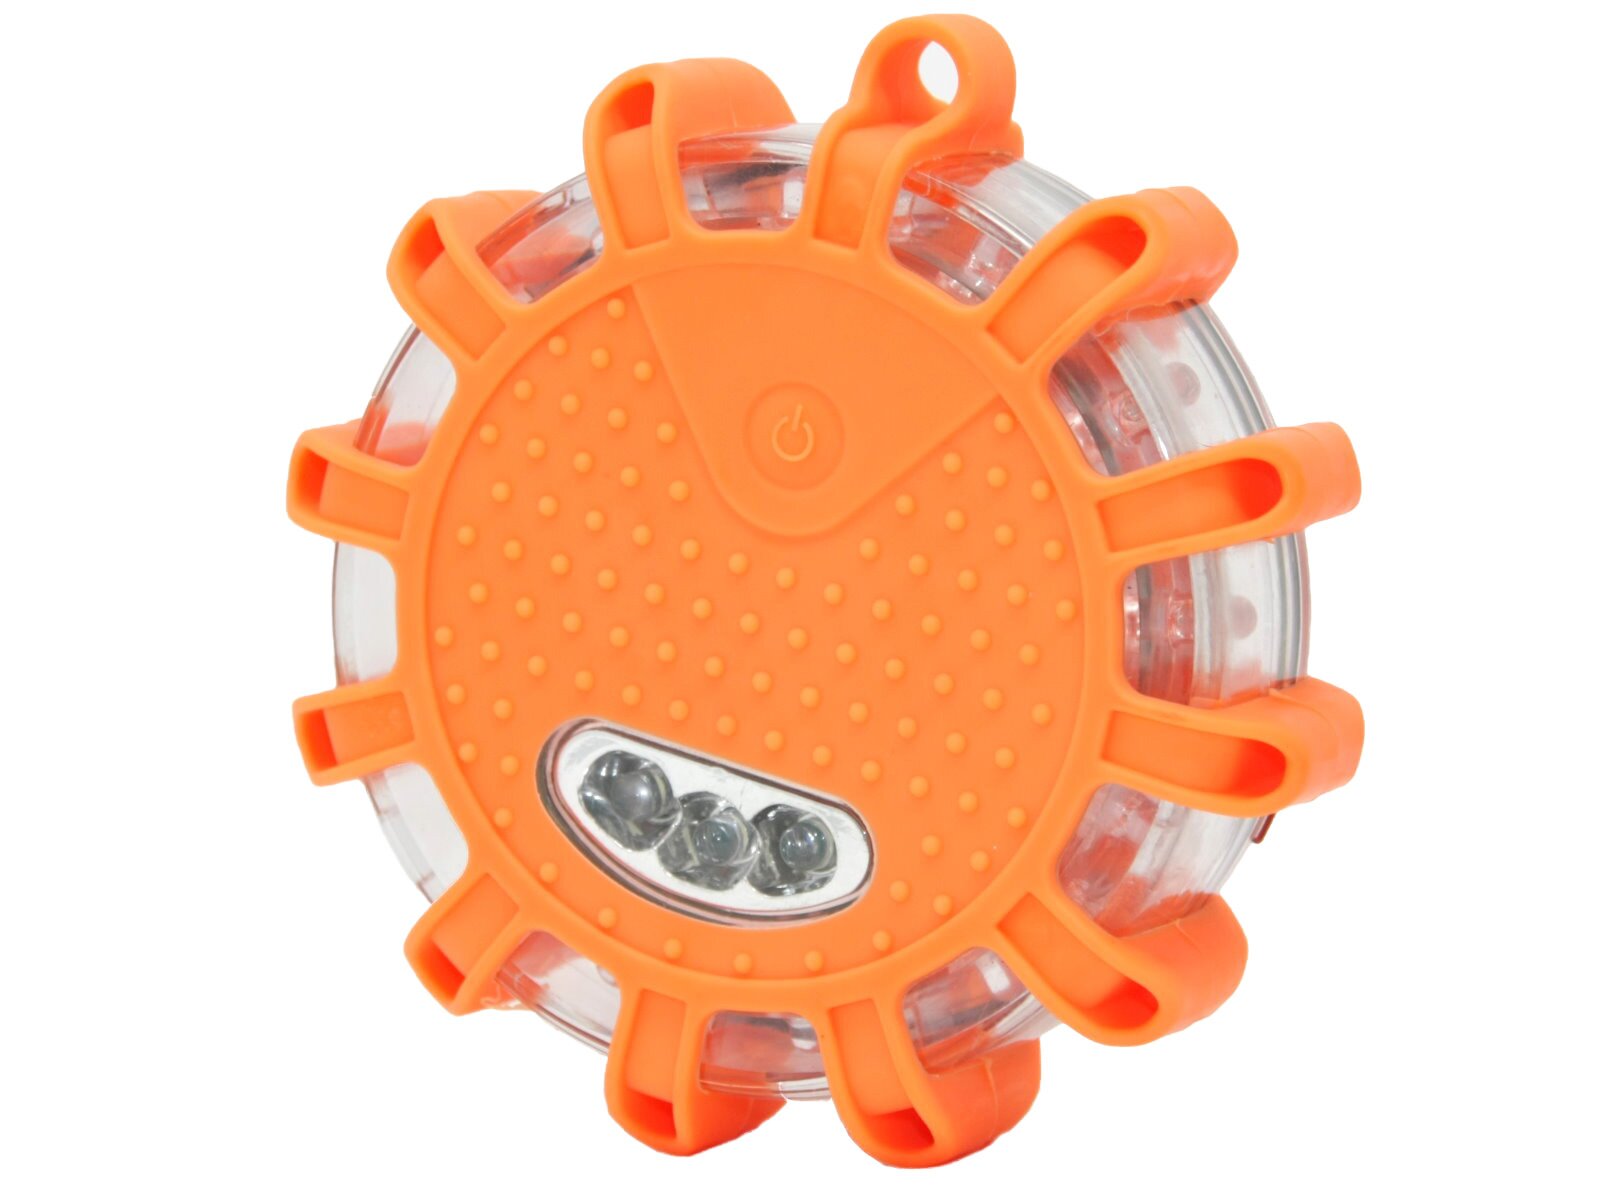 https://www.funkhandel.com/media/image/product/4946/lg/powerflash-plus-led-signalleuchte-batterie-orange.jpg